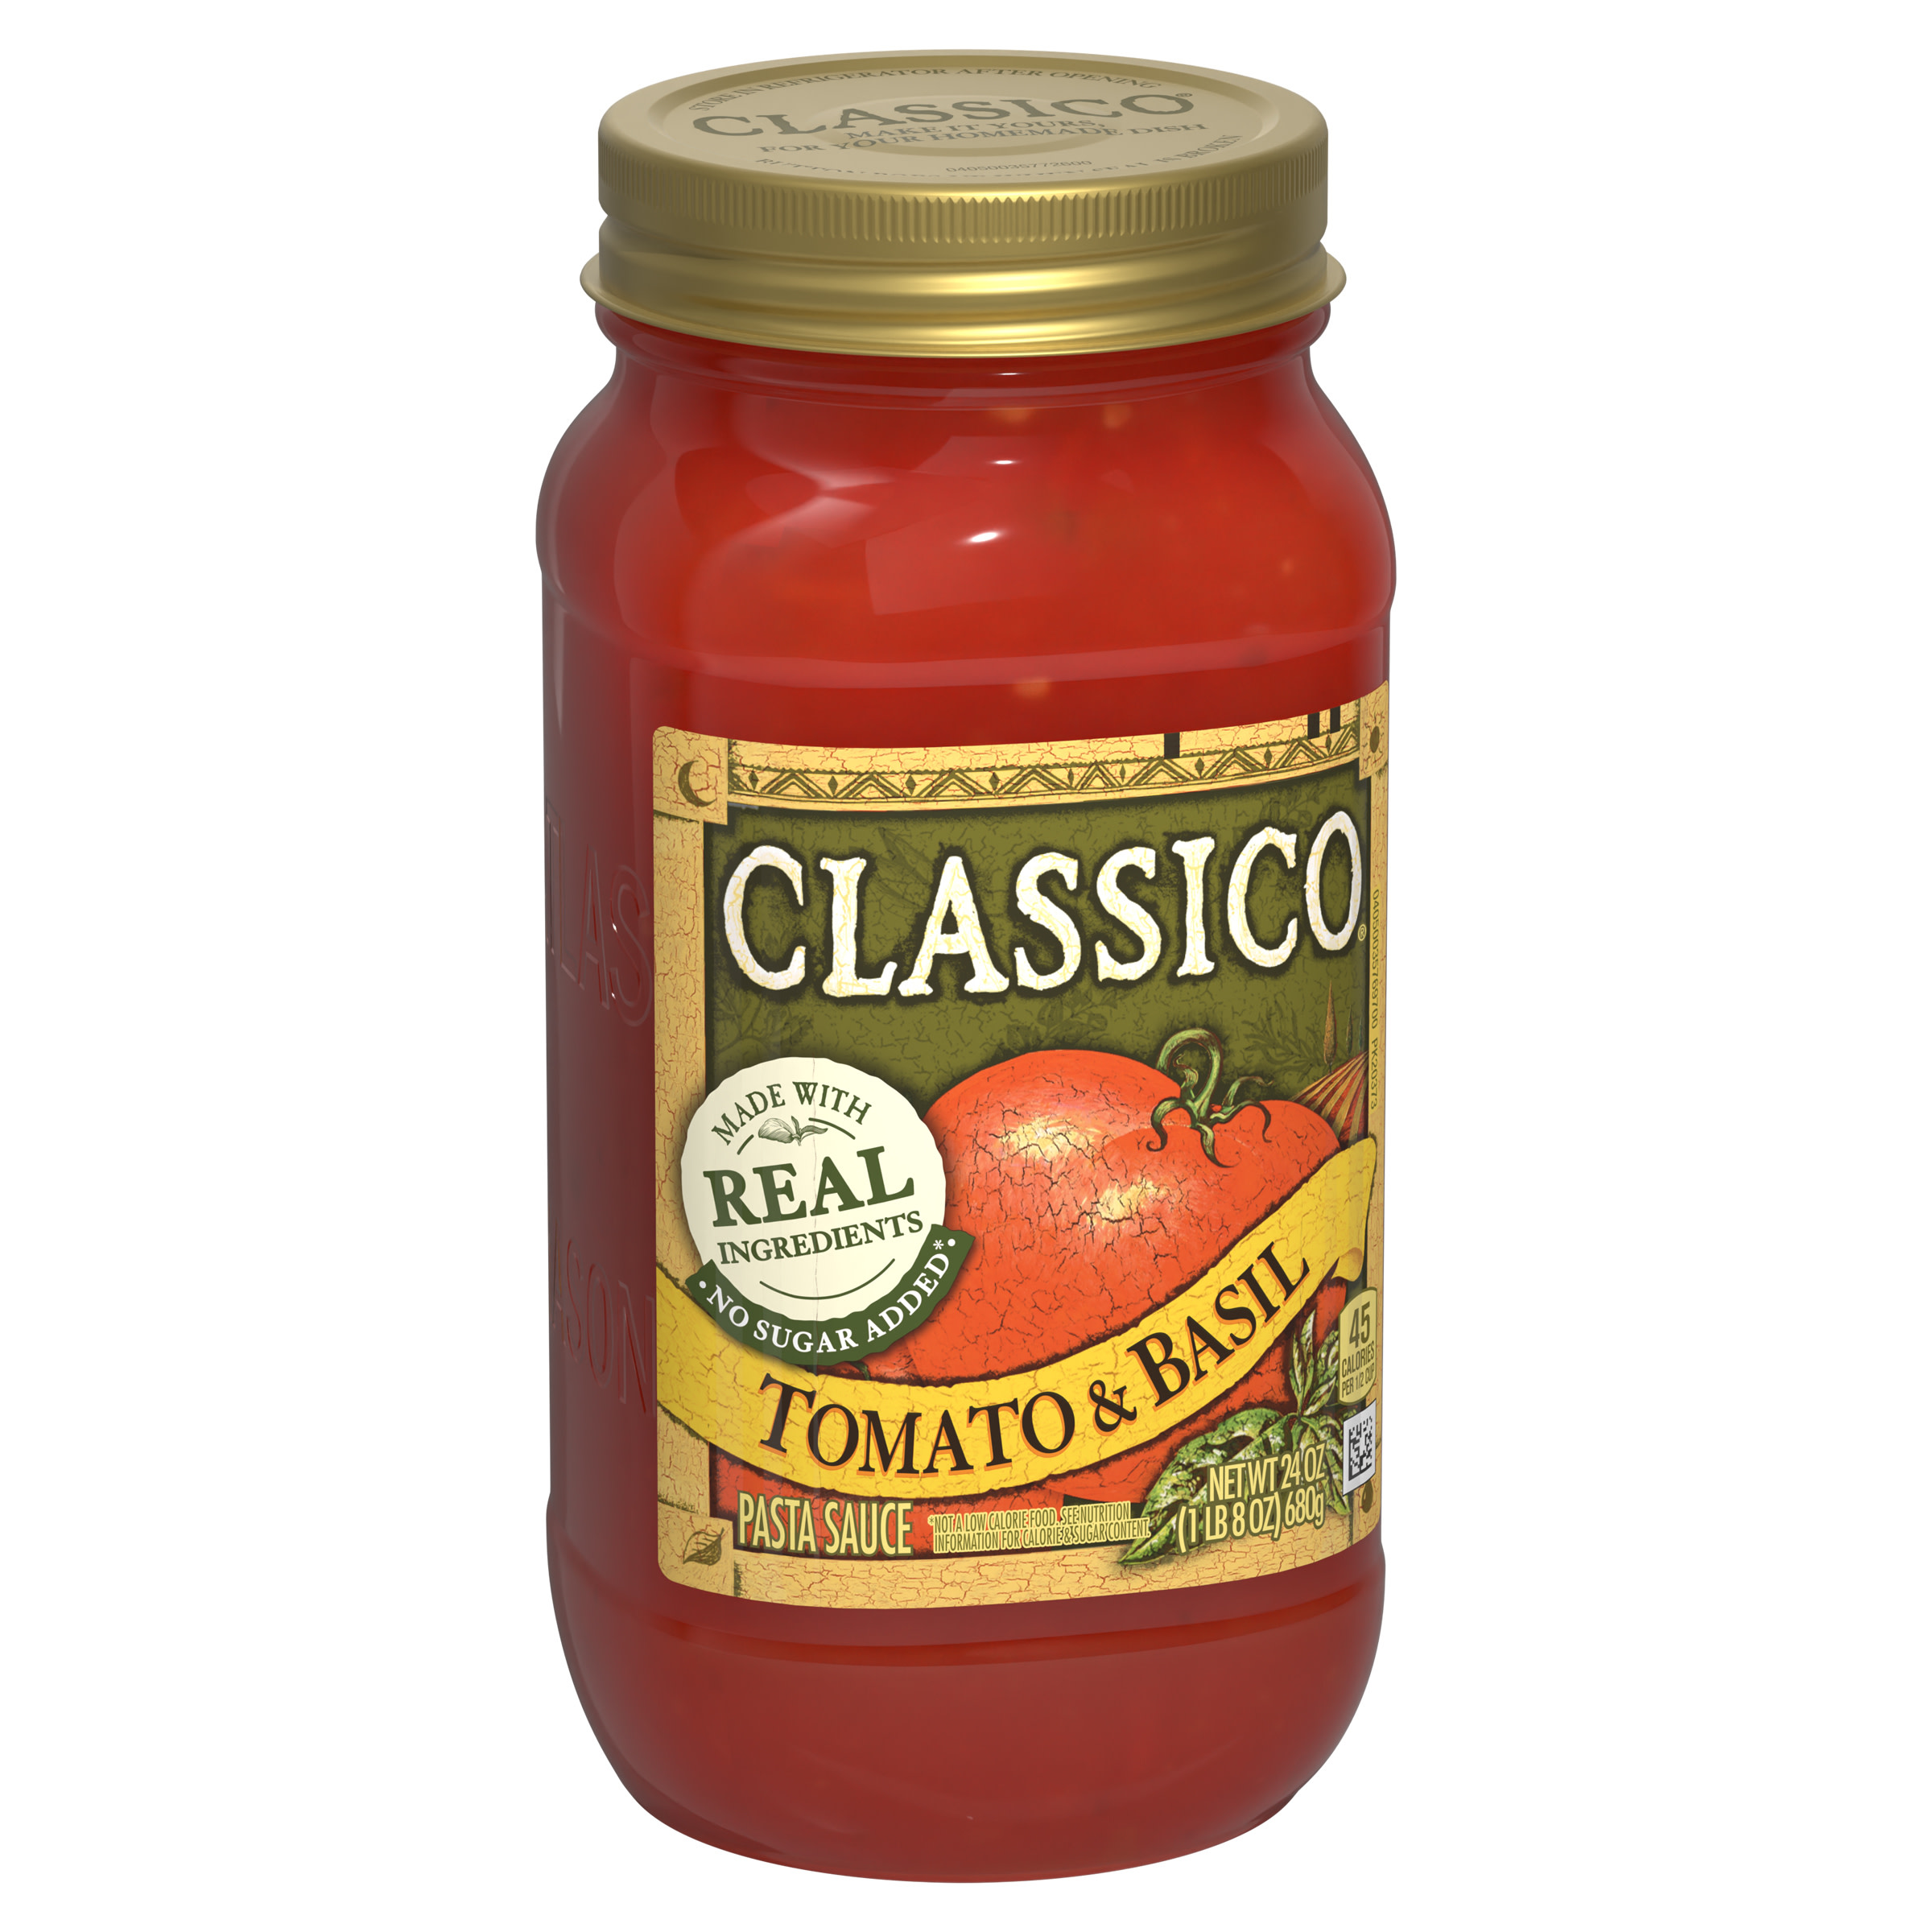 Classico Tomato & Basil Spaghetti Pasta Sauce, 24 oz. Jar - image 10 of 18